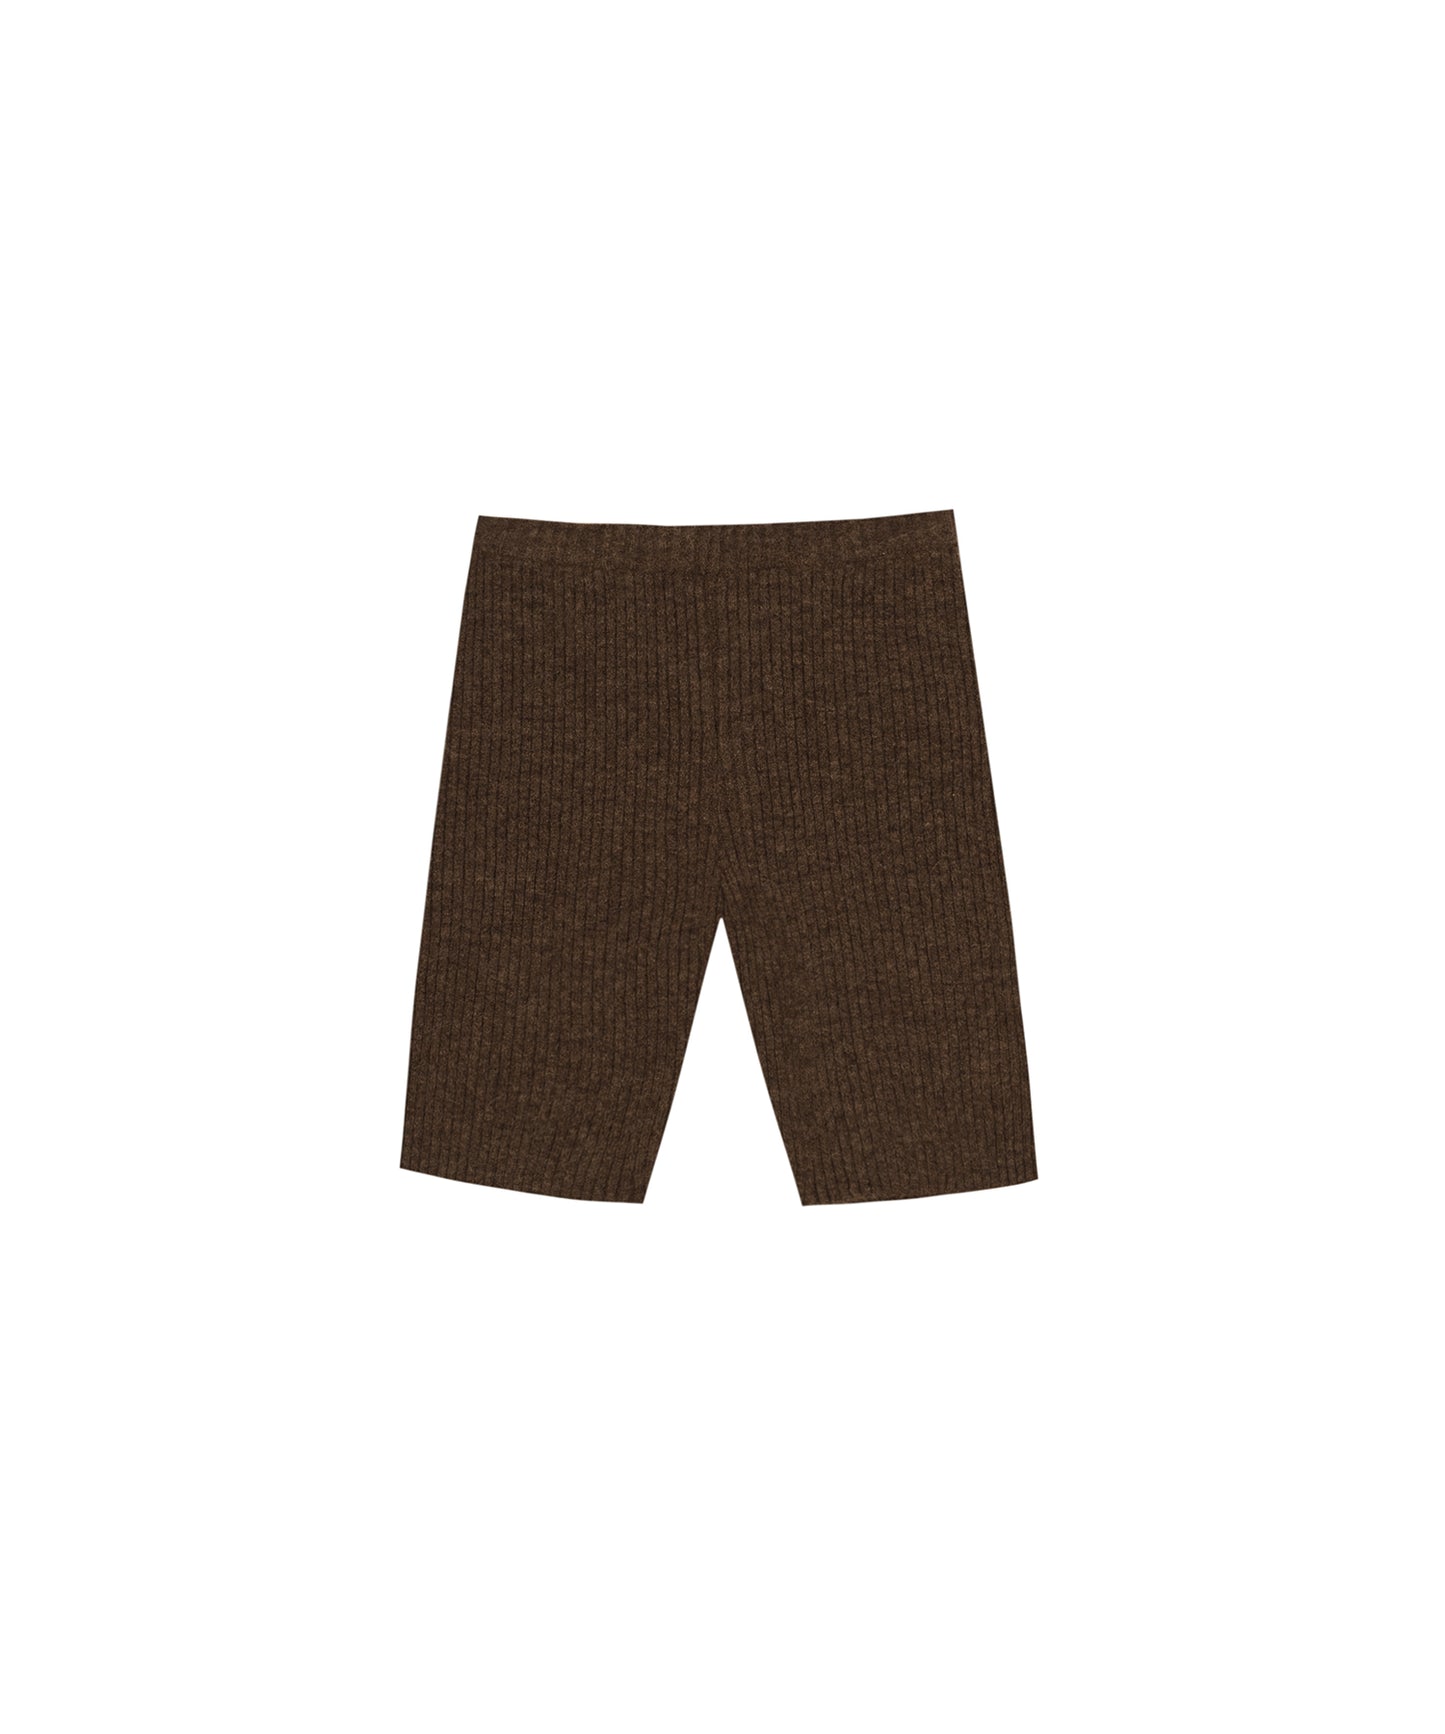 Siu - Knit Biker Shorts - Brown